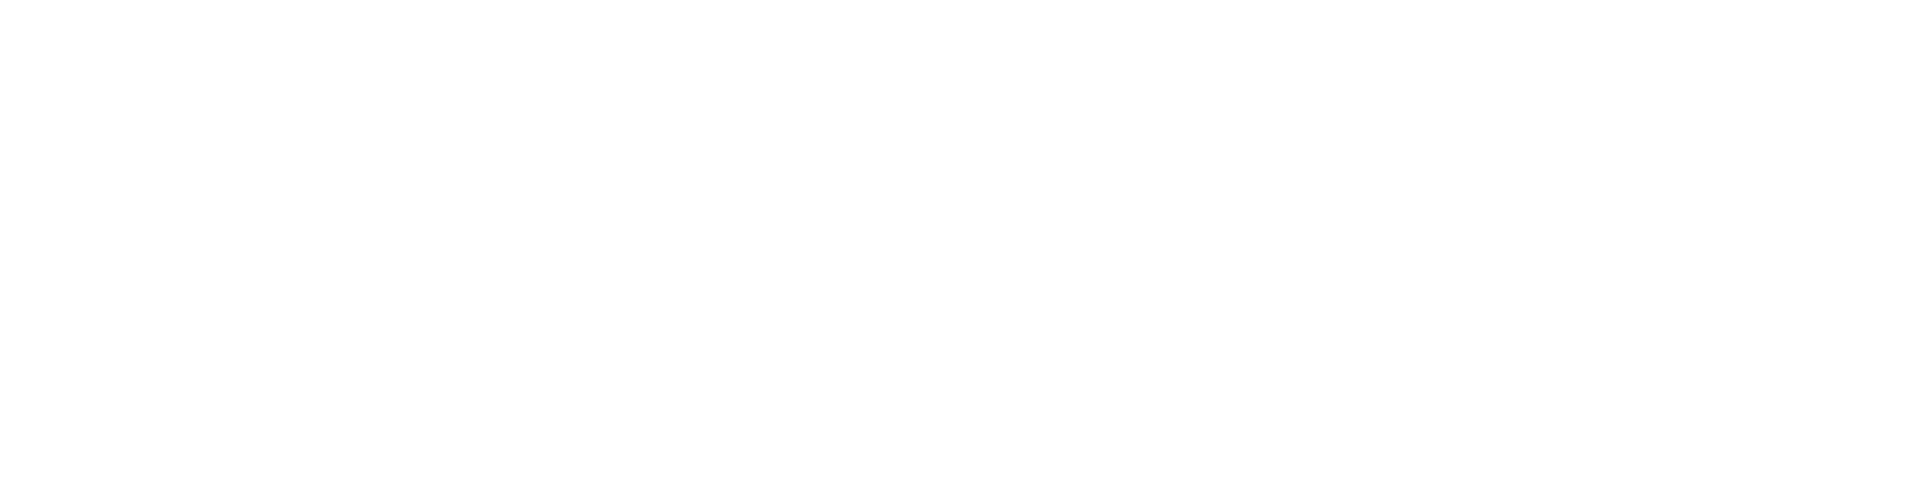 NSB Cyber